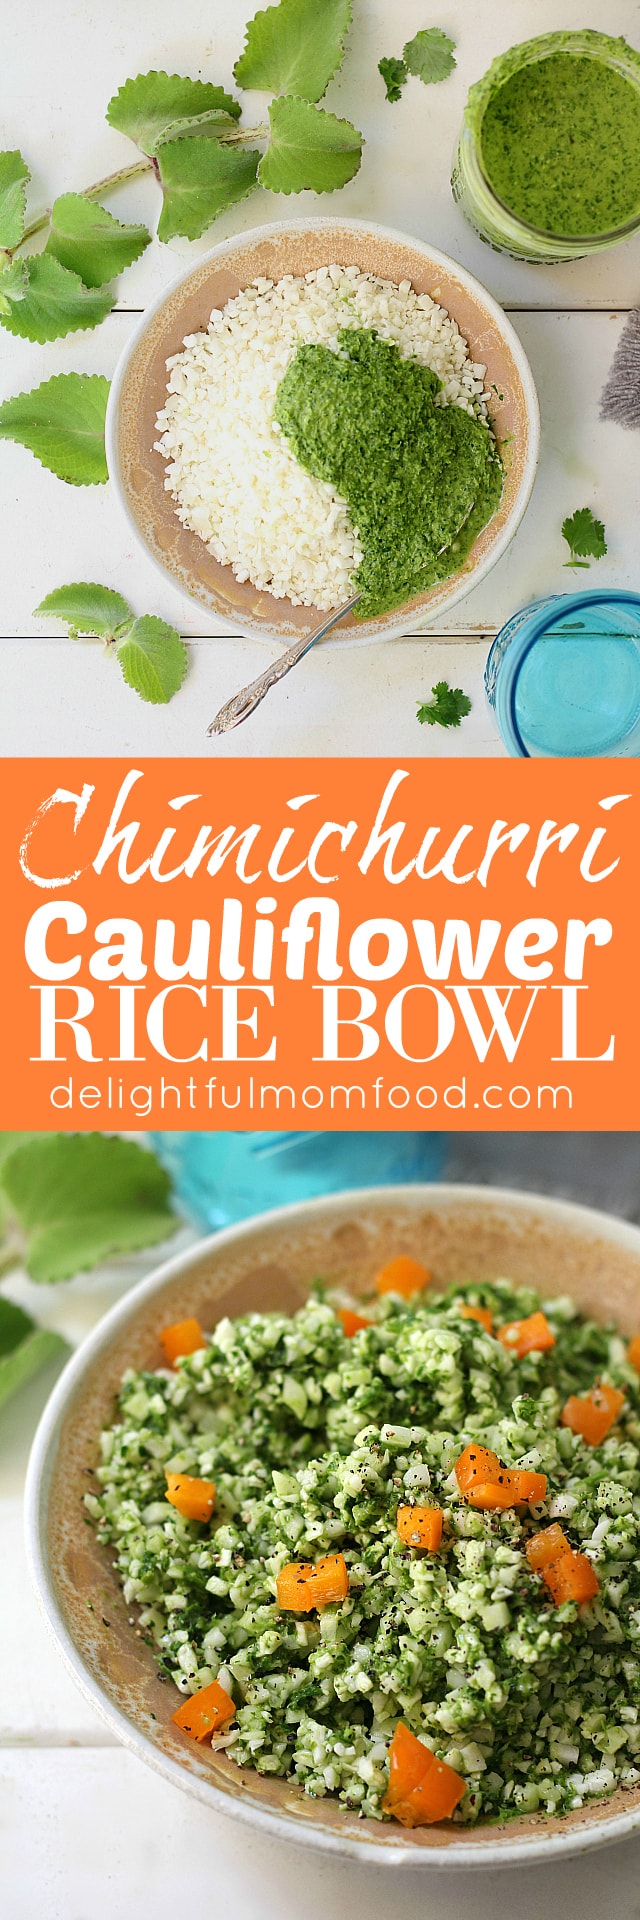 chimichurri cauliflower rice bowl